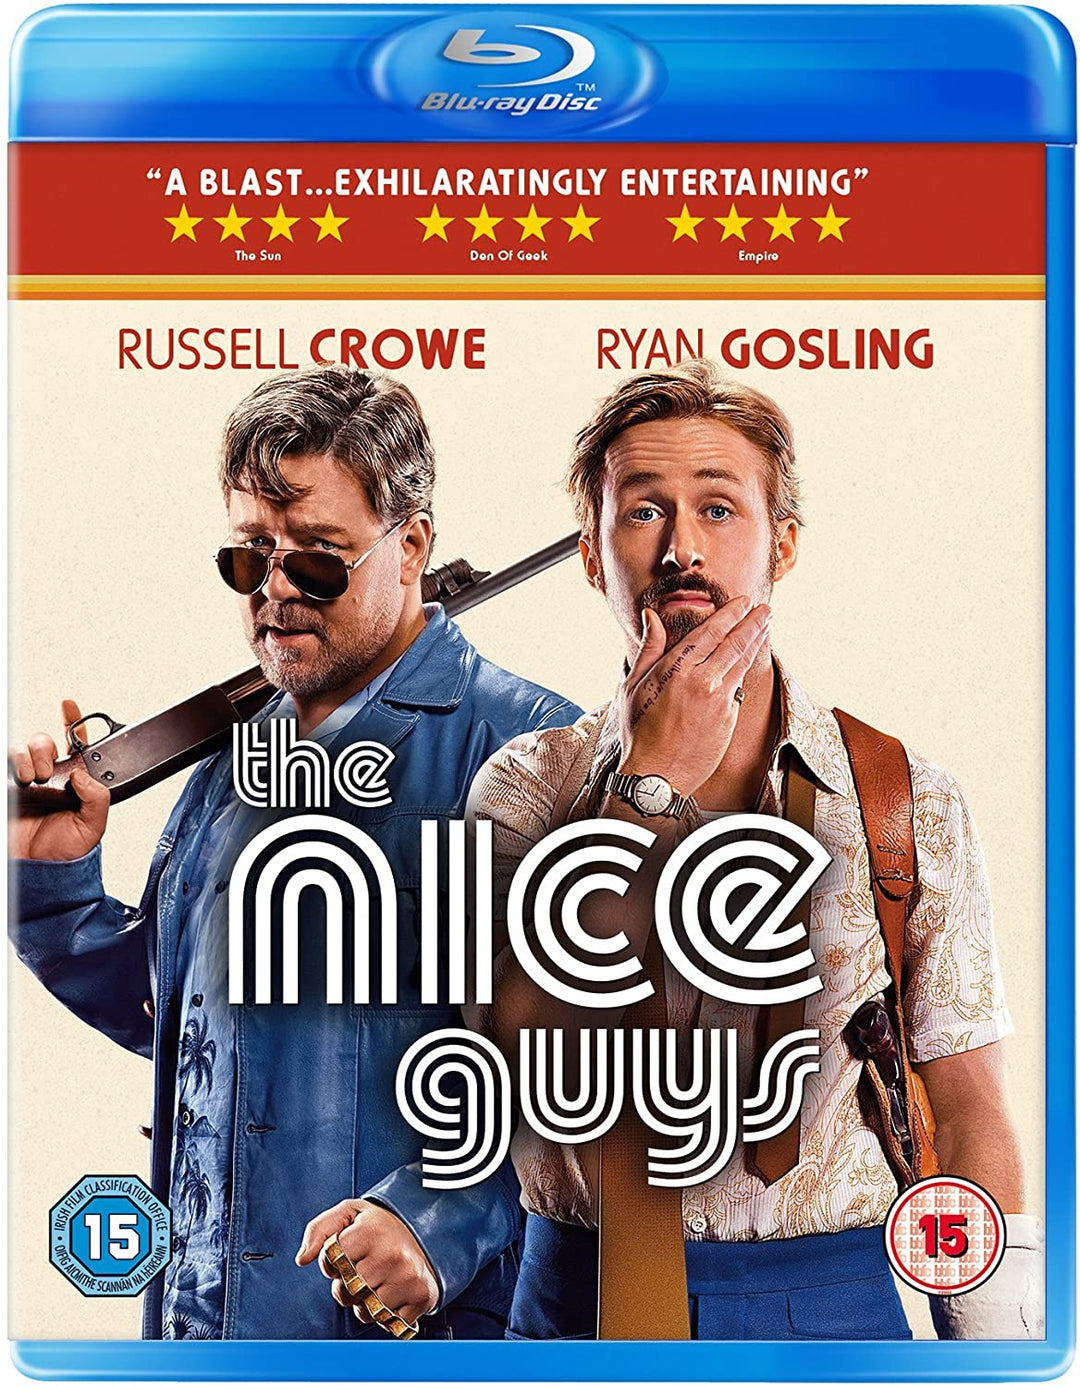 The Nice Guys - Action/Comedy [Blu-ray]